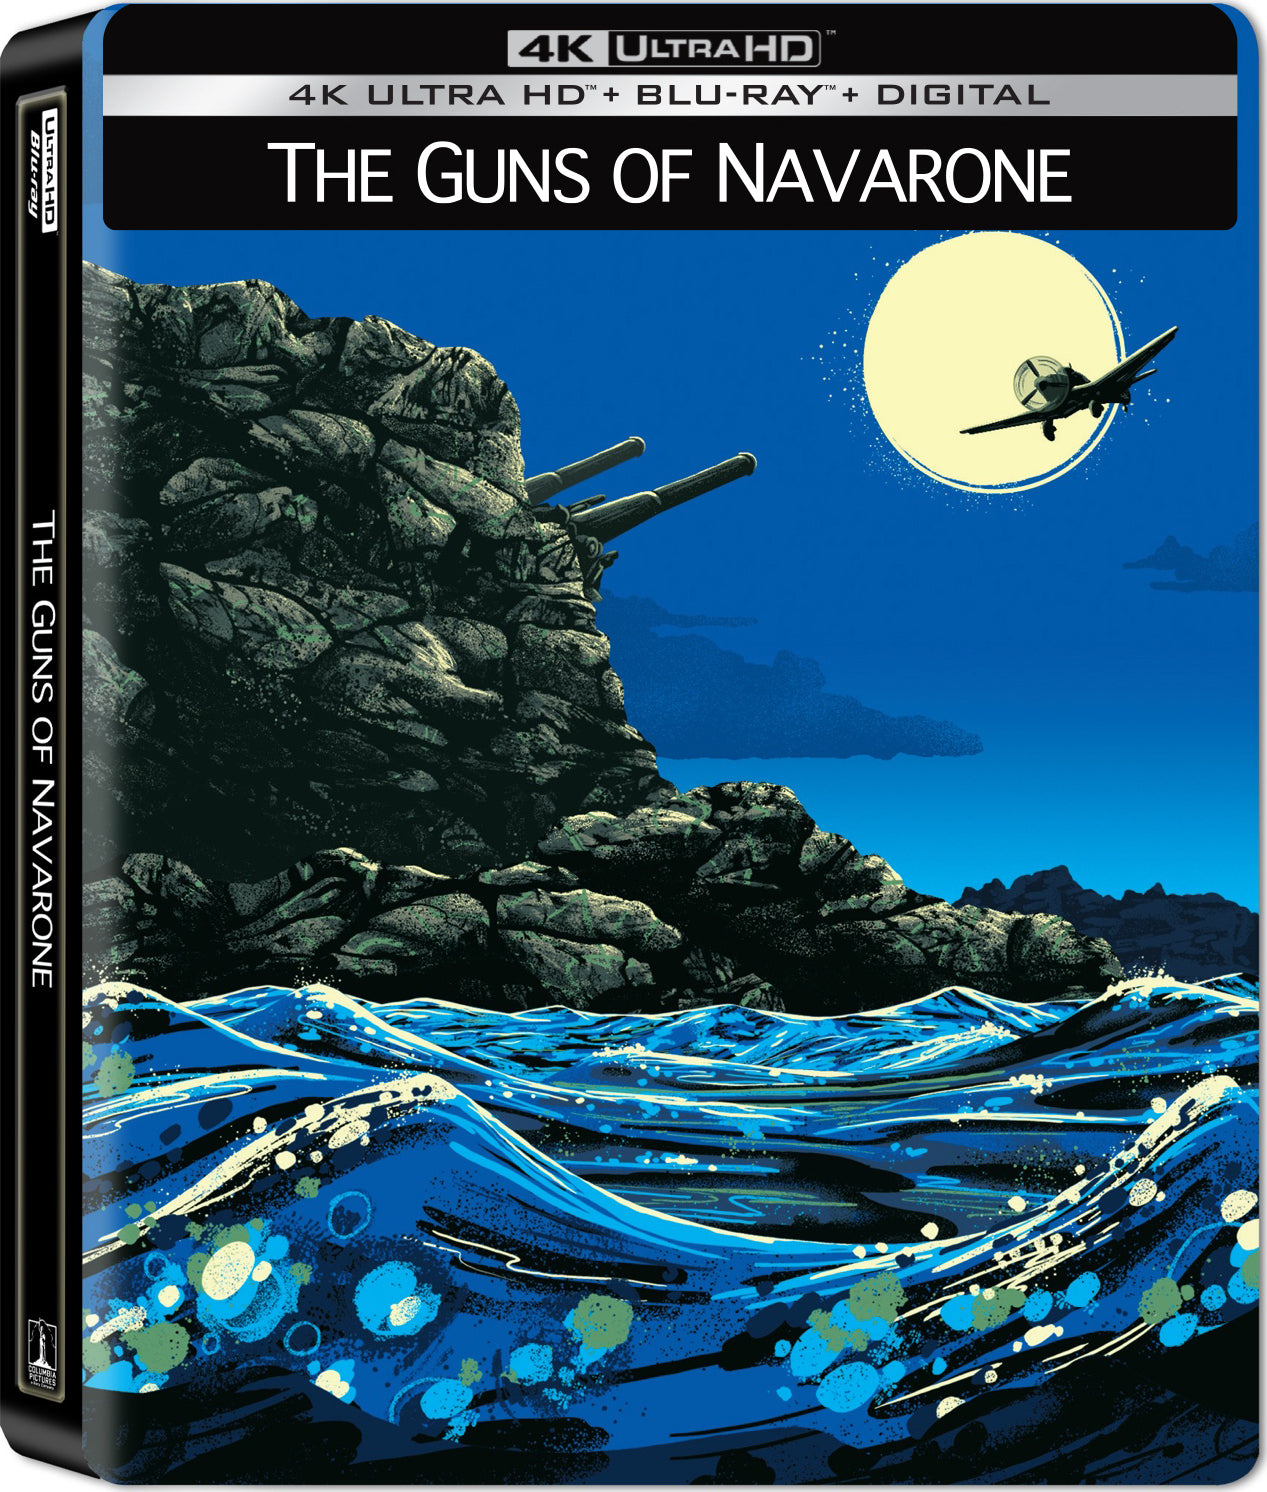 THE GUNS OF NAVARONE (LIMITED EDITION) 4K UHD/BLU-RAY STEELBOOK